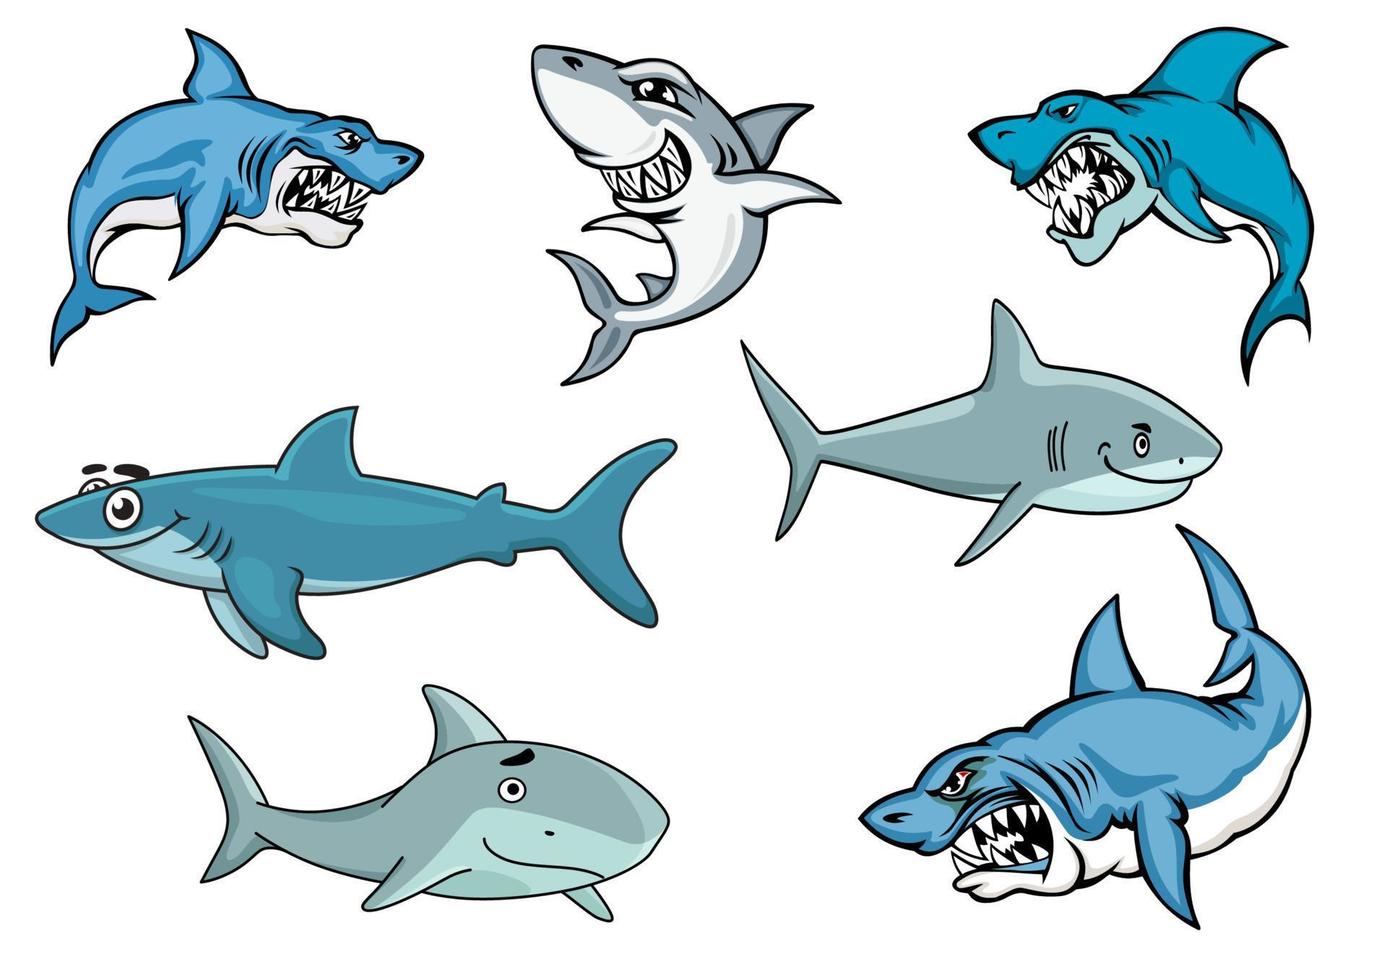 requins de dessin animé avec diverses expressions vecteur